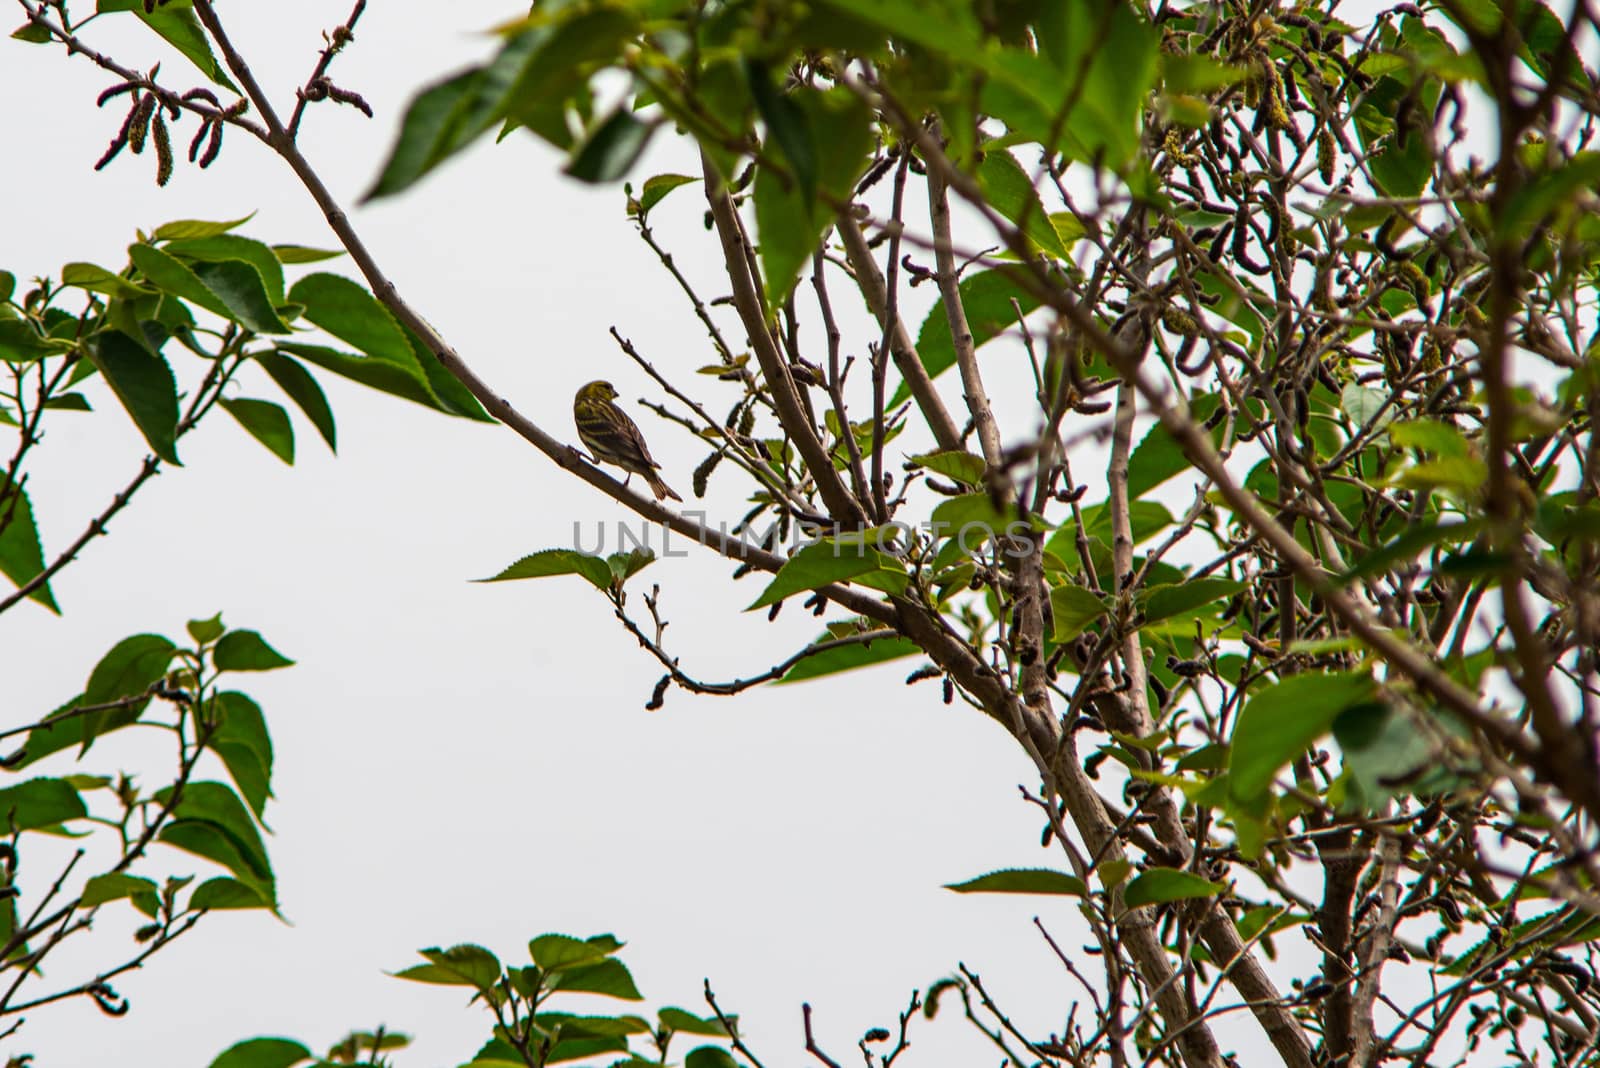 greenfinch bird looking for food on alberero verde